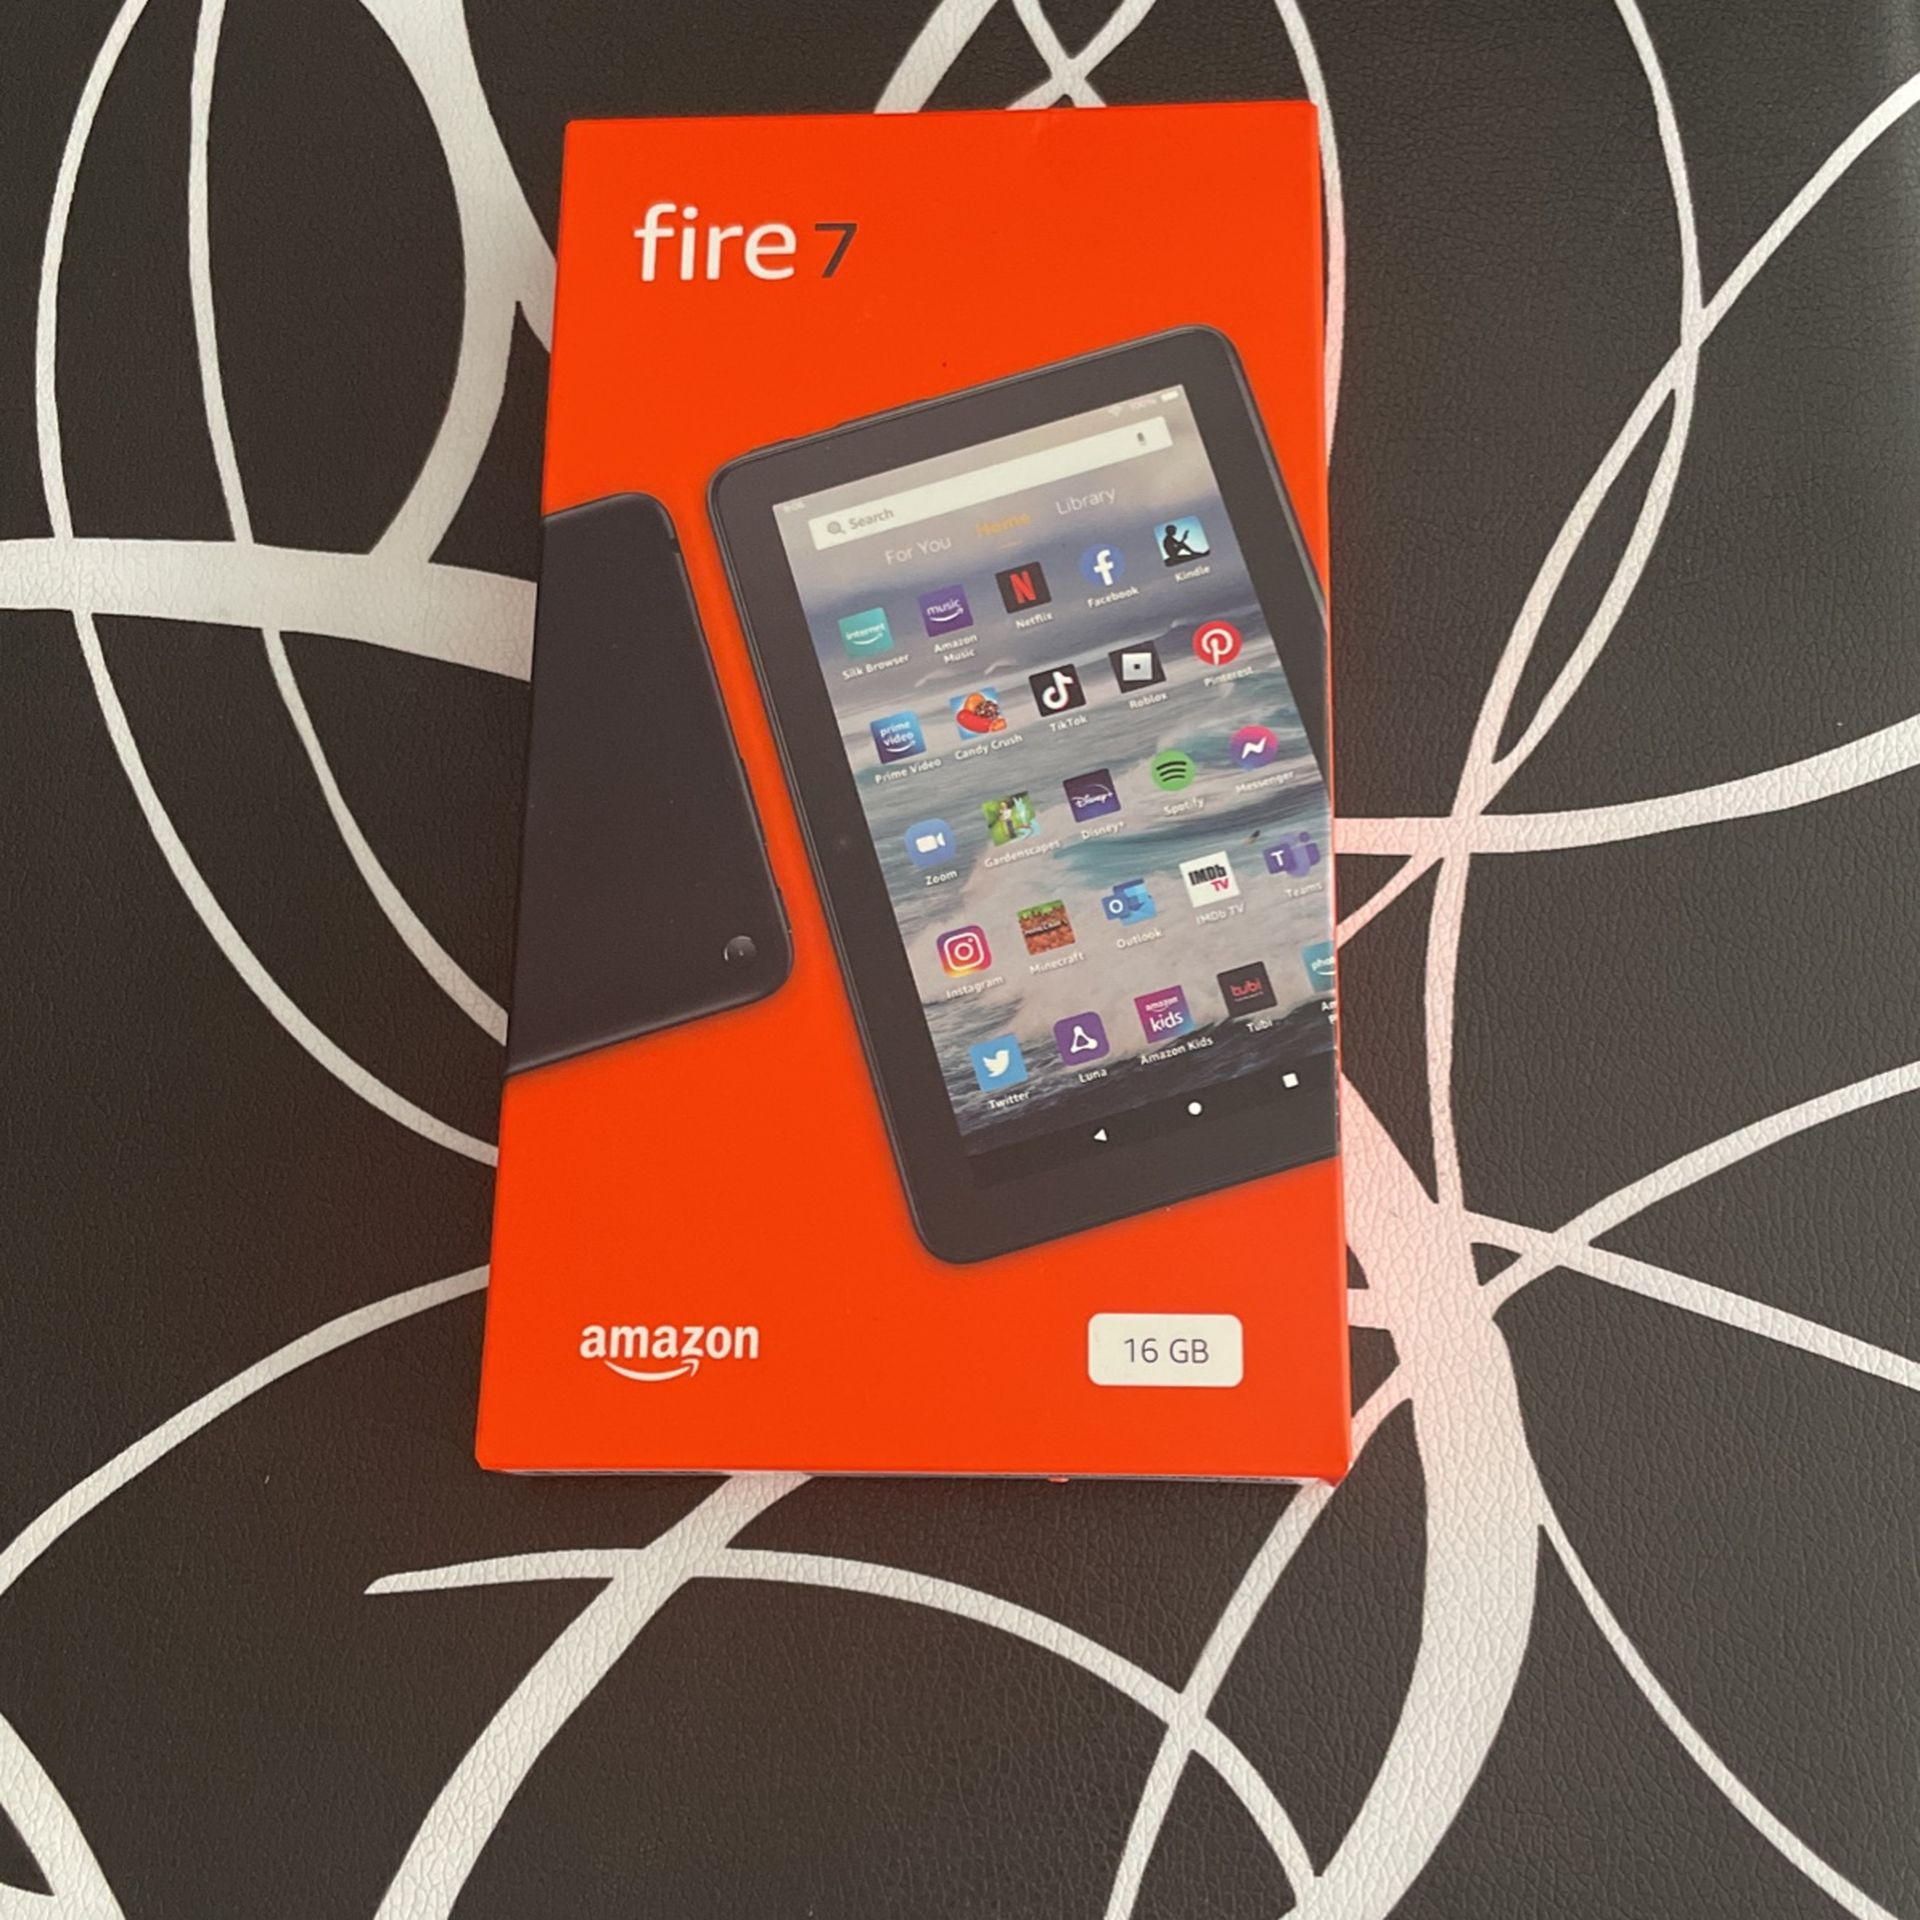 Amazon Tablet Fire 7. 16 GB